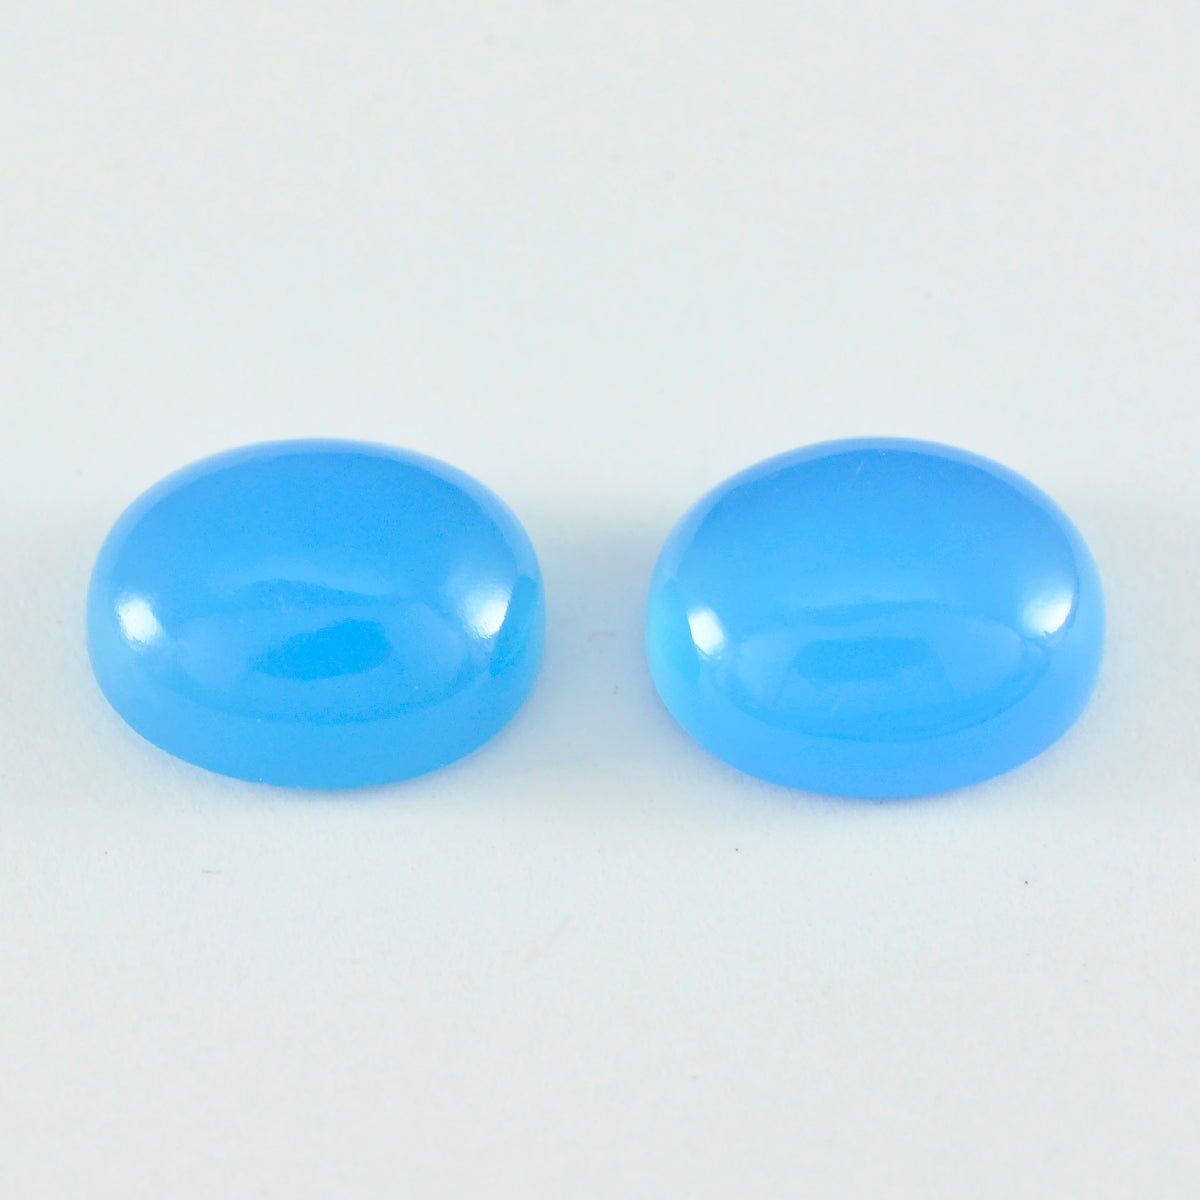 Riyogems 1PC Blue Chalcedony Cabochon 8x10 mm Oval Shape awesome Quality Loose Gemstone